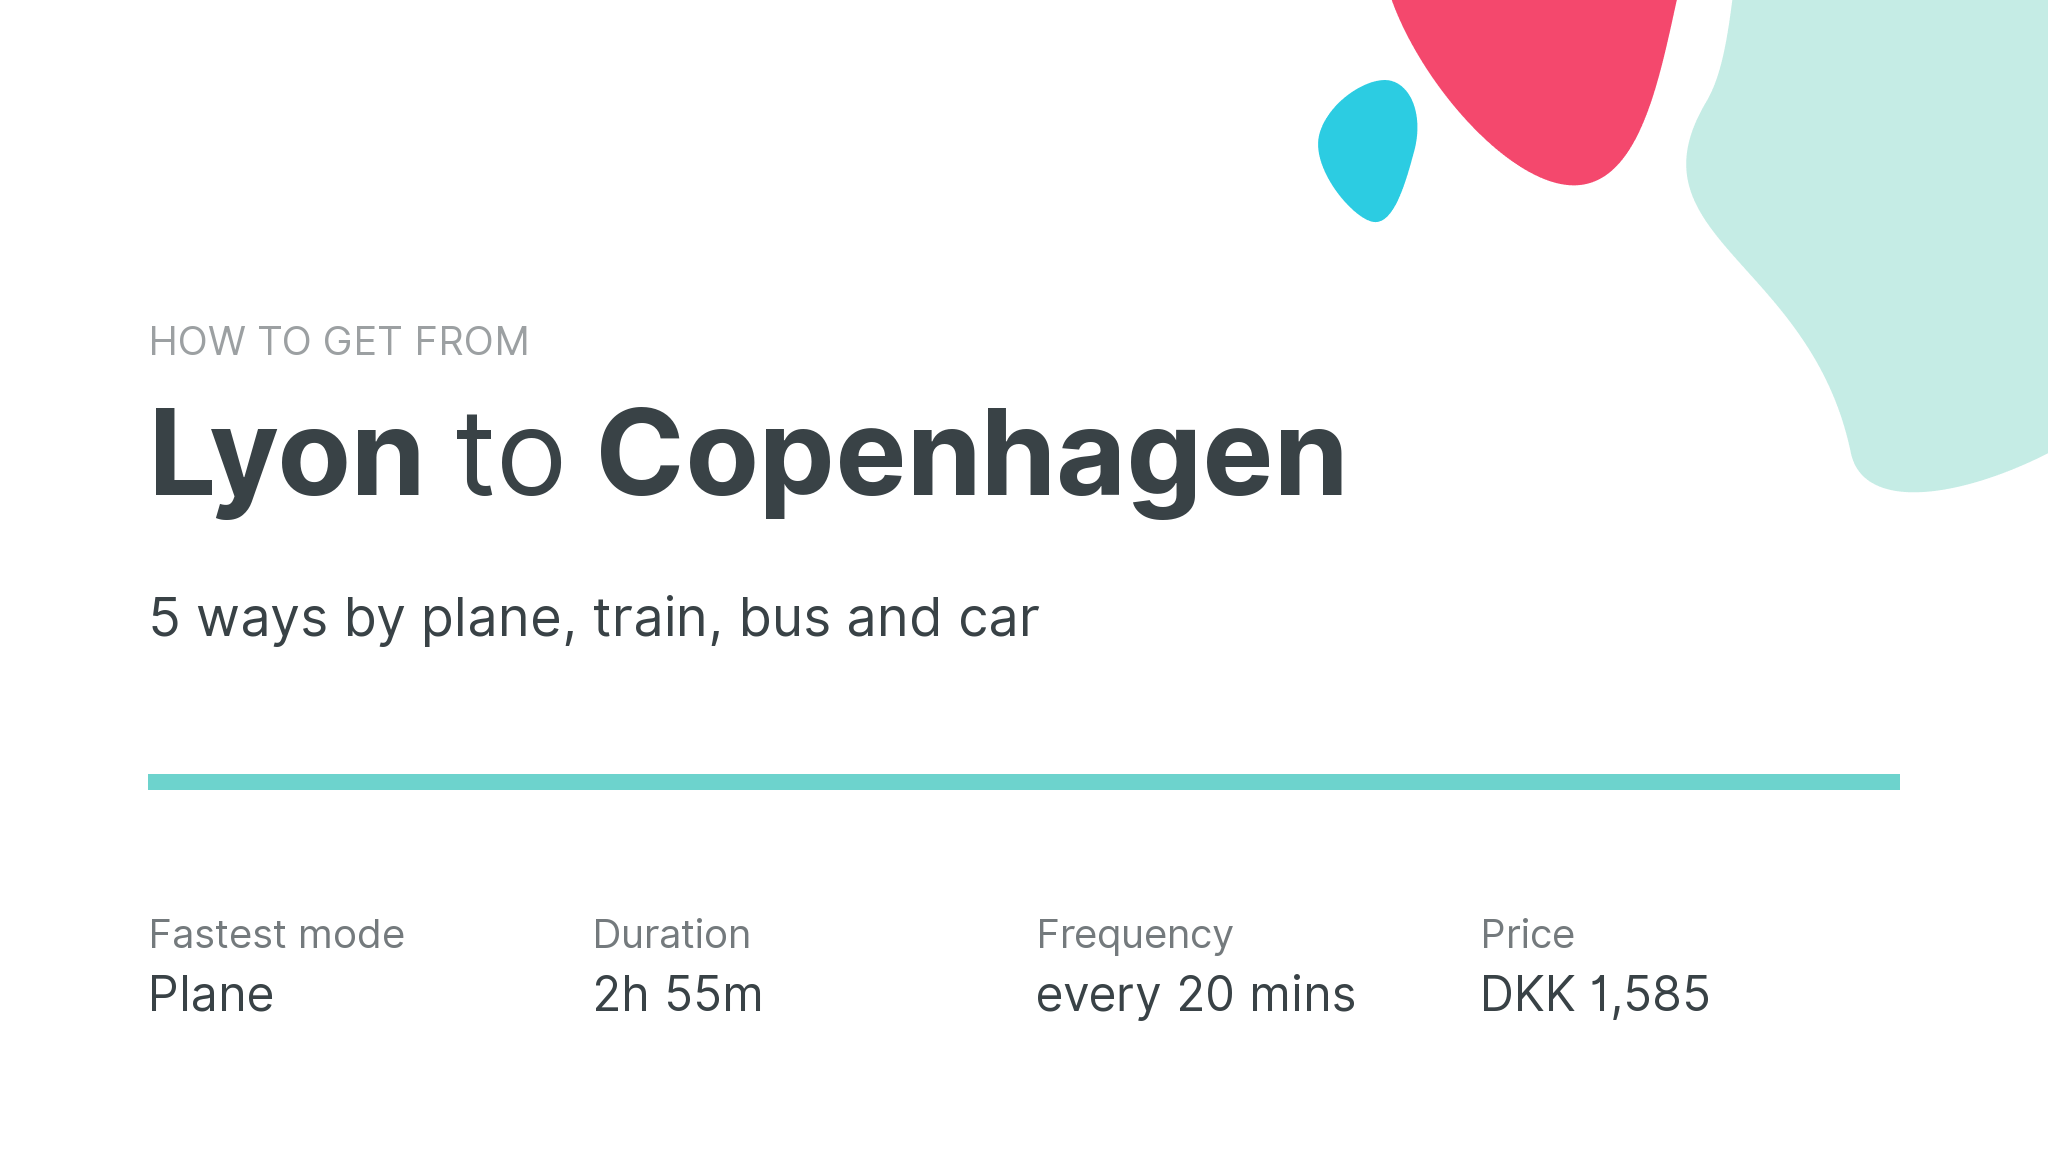 How do I get from Lyon to Copenhagen